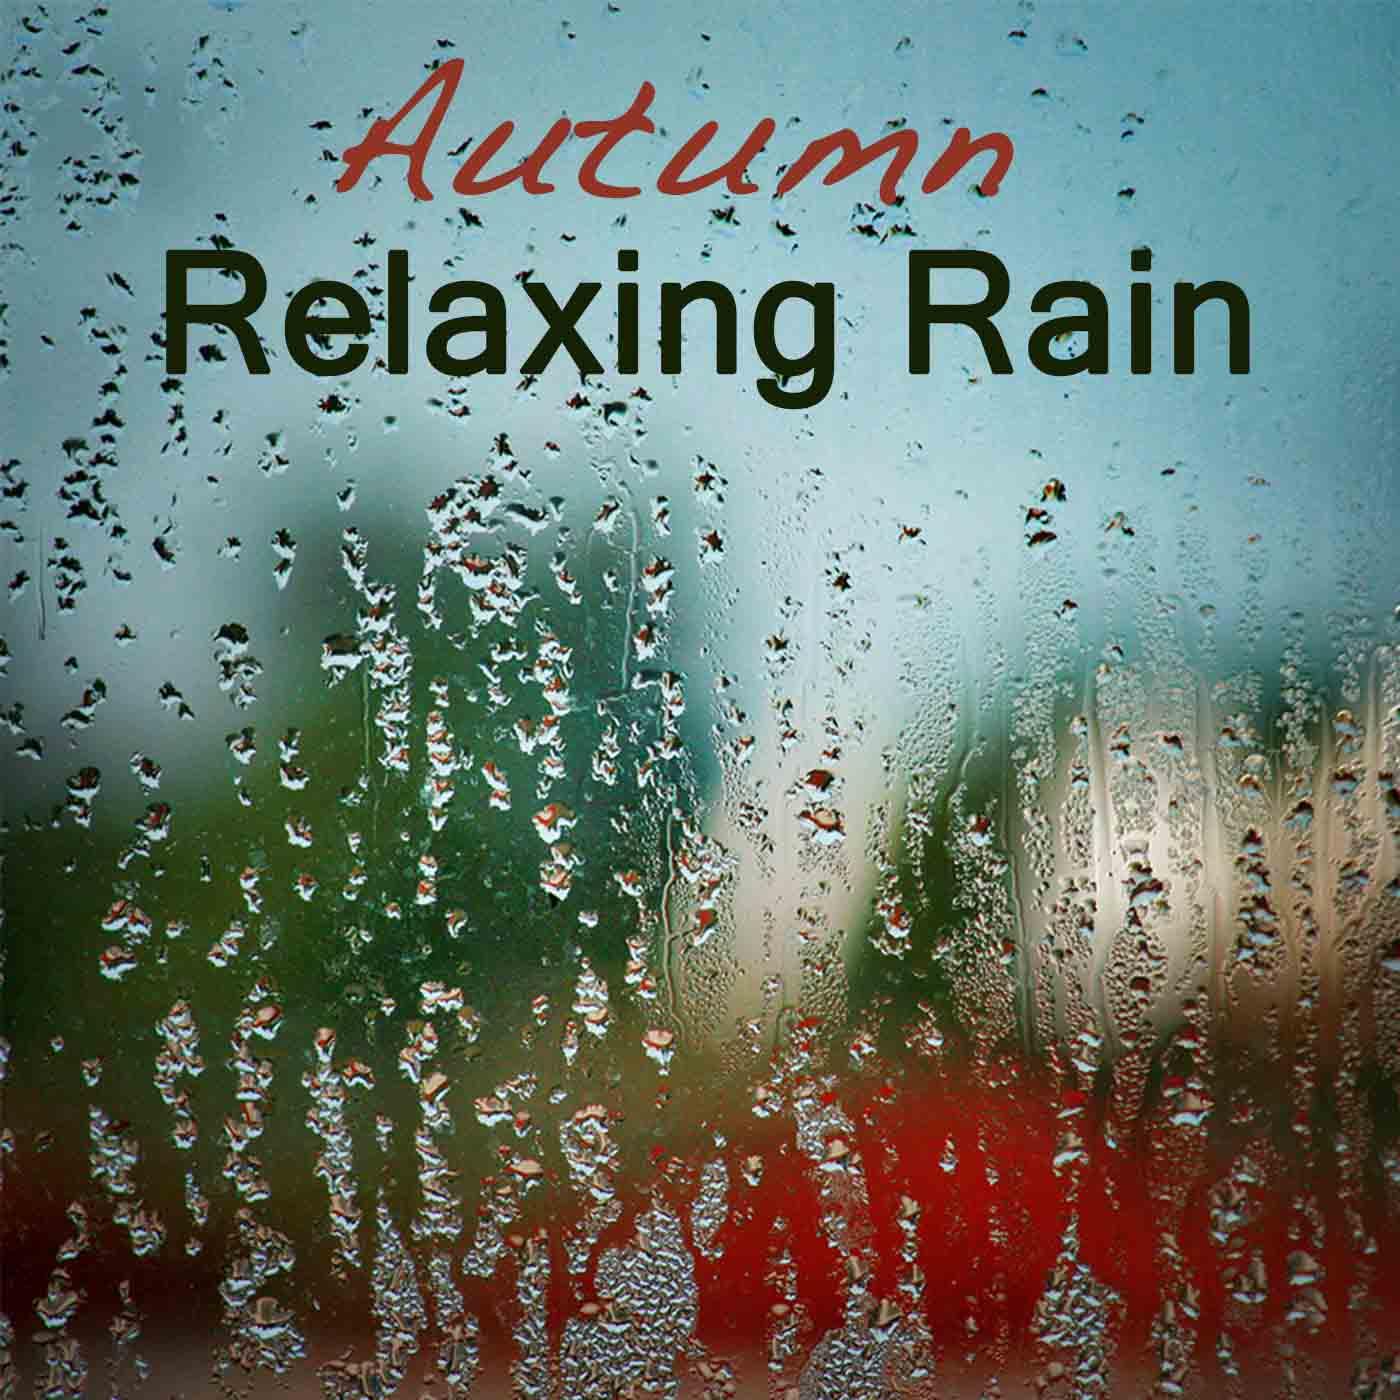 Piano Music & Sound of Rain